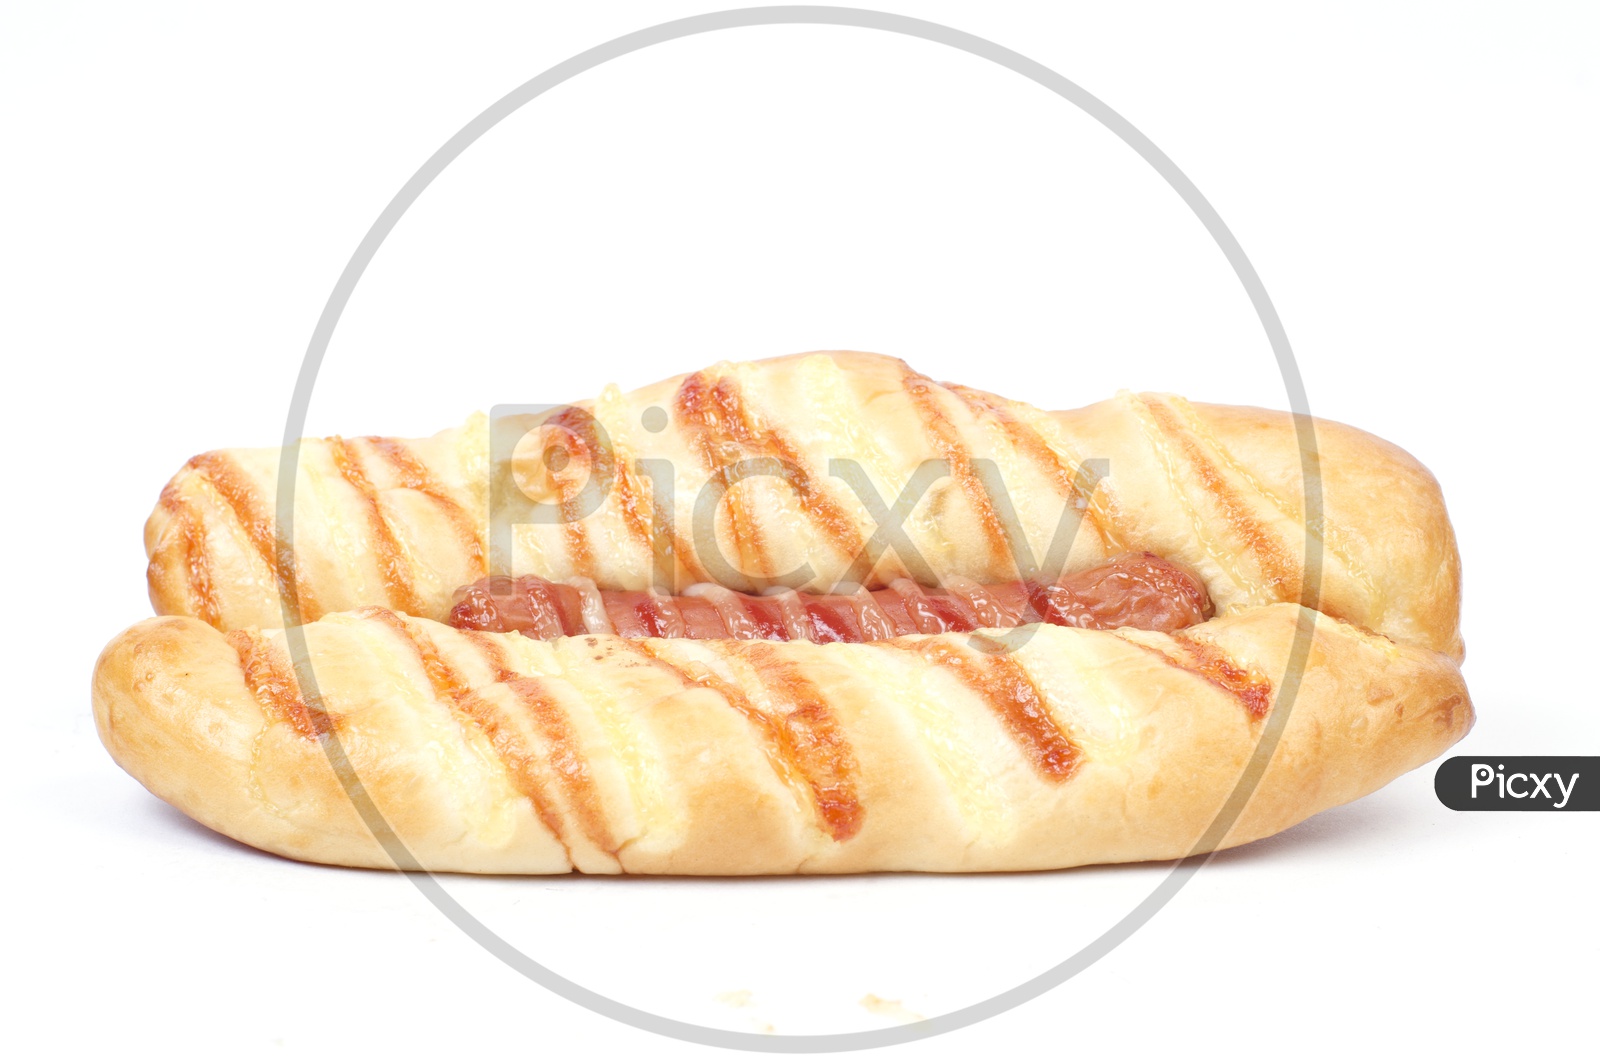 hot dog over white background